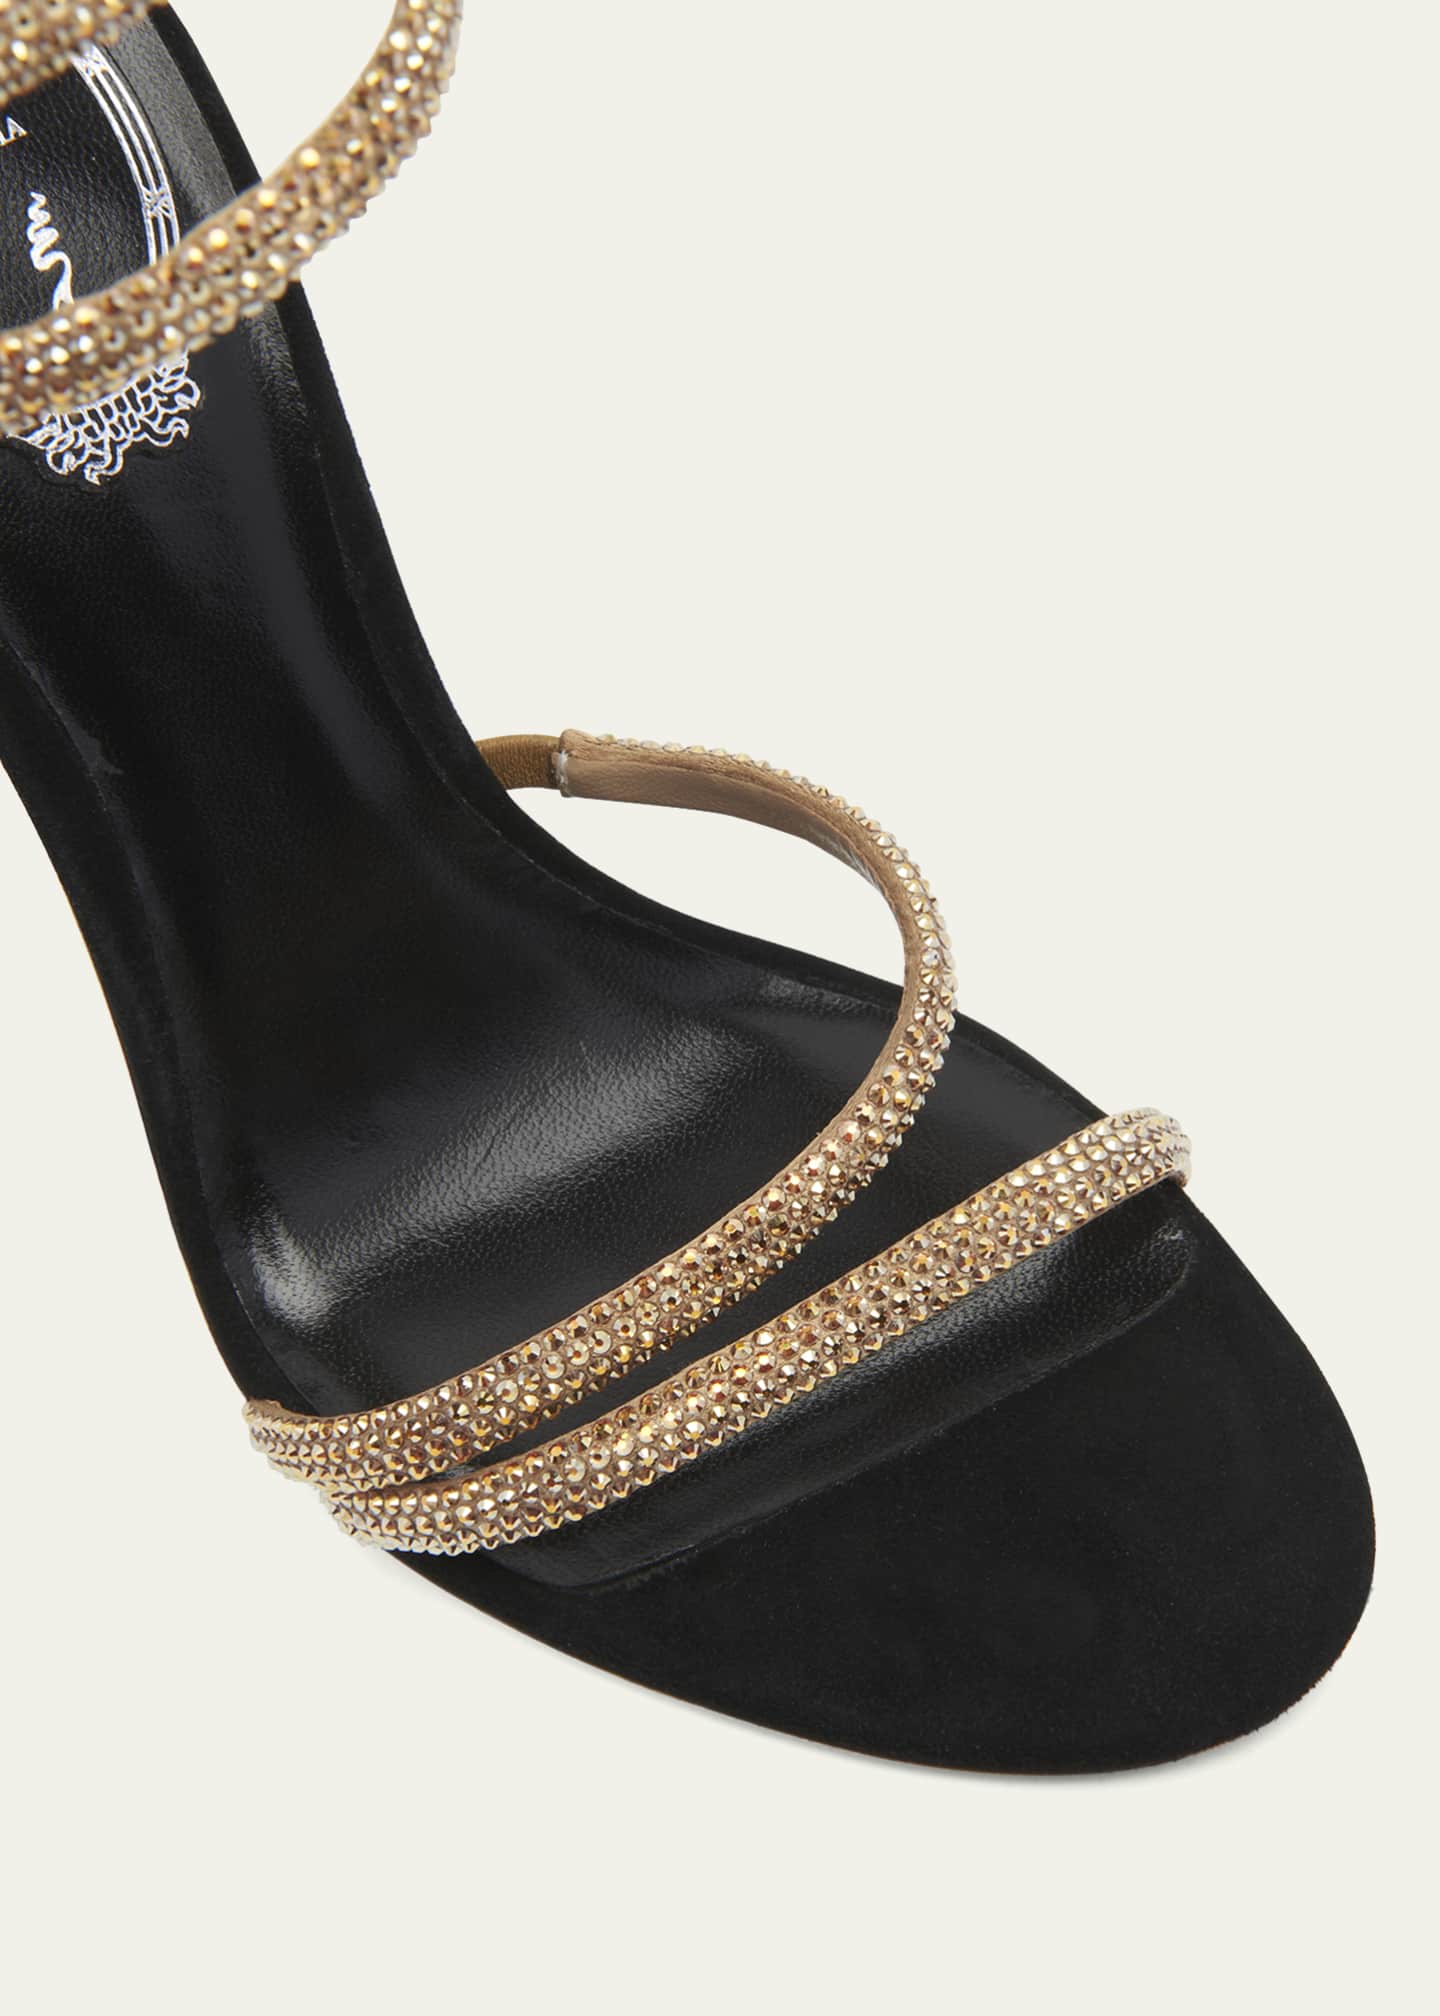 Rene Caovilla Cleo 105mm Strass Snake-Wrap Sandals - Bergdorf Goodman